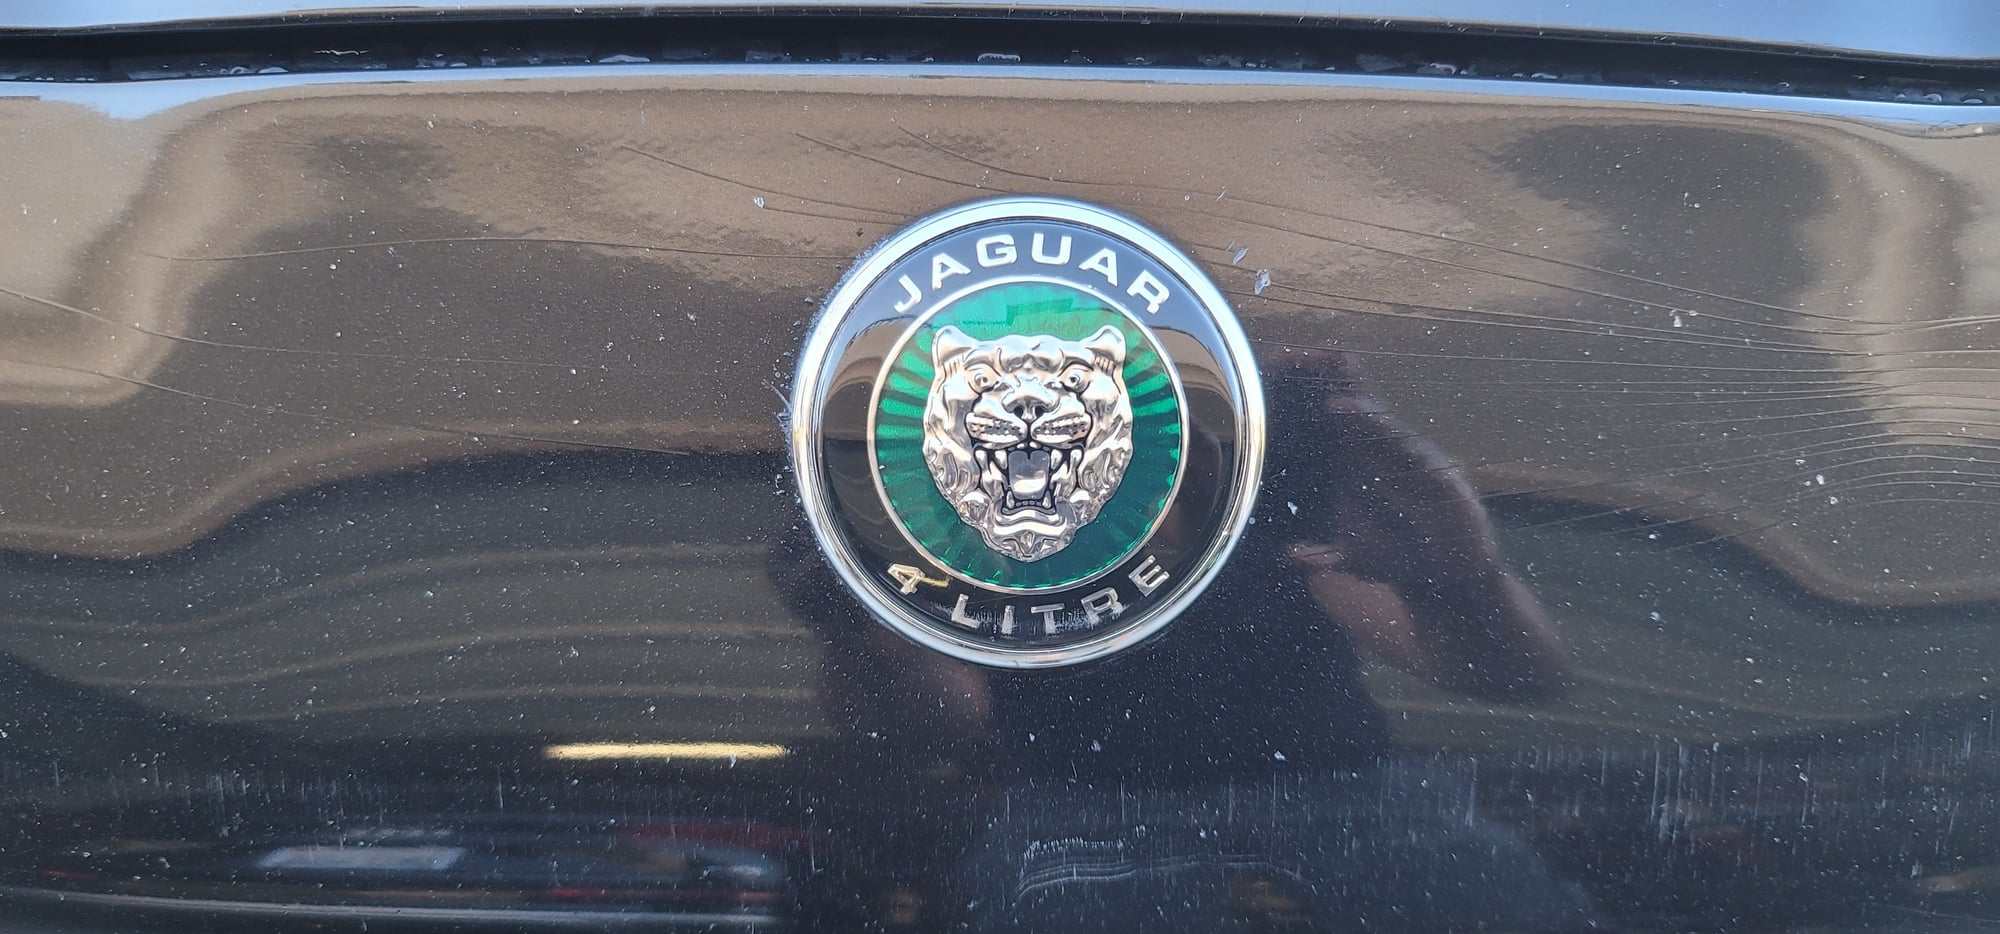 2000 Jaguar XK8 - 2000 Jaguar XK8 Black Cat - Used - VIN SAJJA42C2YNA08099 - 105,000 Miles - 8 cyl - 2WD - Automatic - Convertible - Black - Valencia, CA 91354, United States